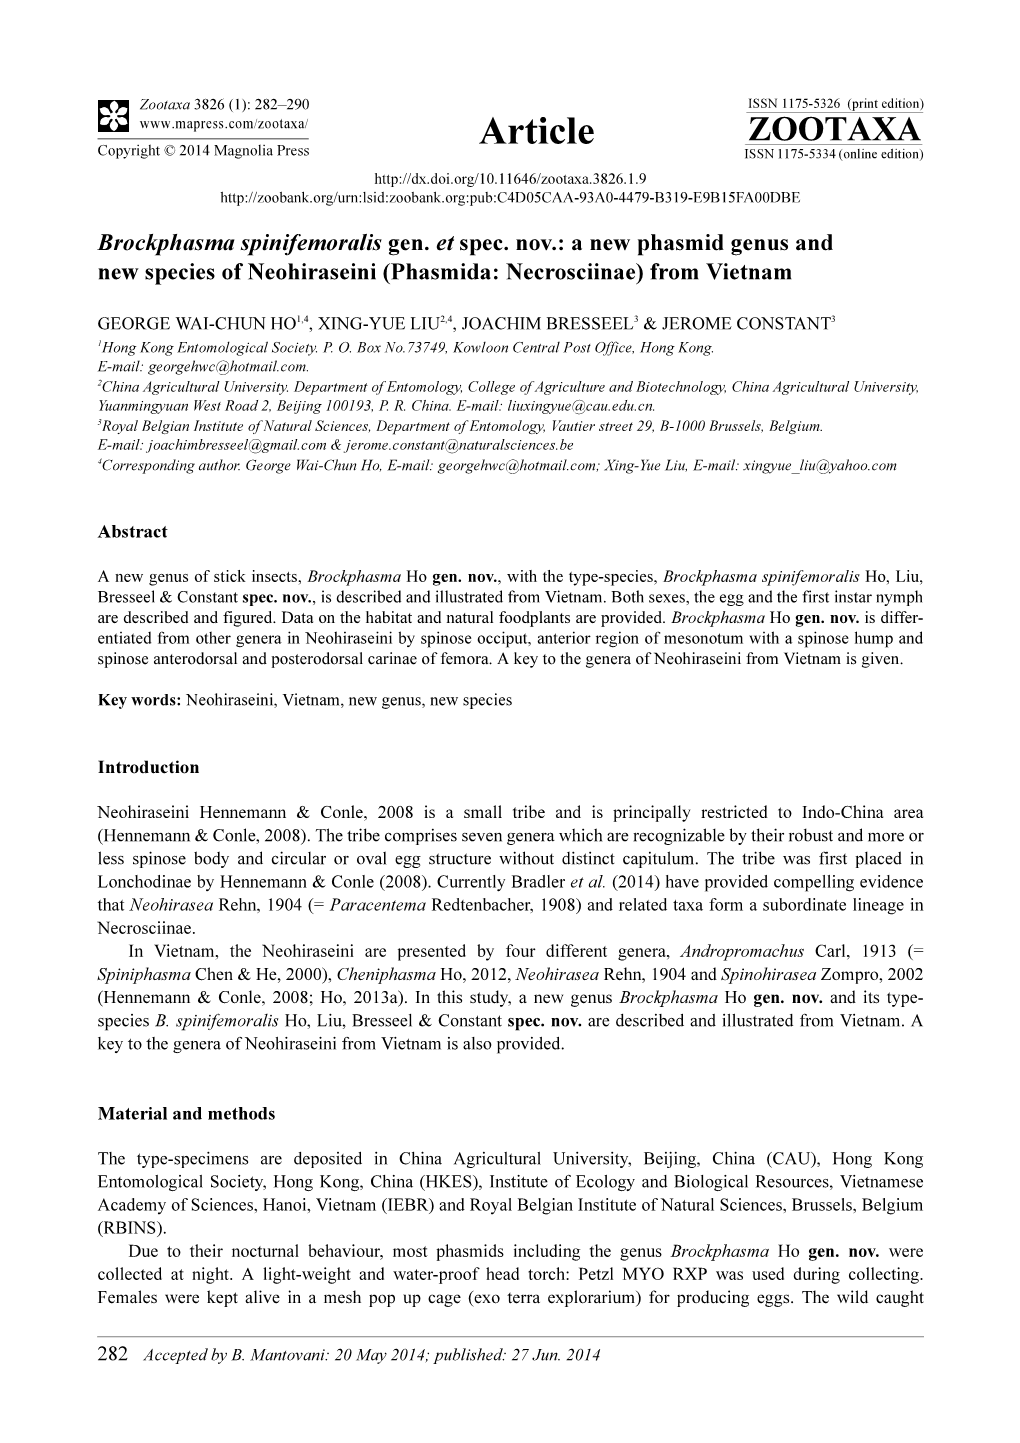 A New Phasmid Genus and New Species of Neohiraseini (Phasmida: Necrosciinae) from Vietnam